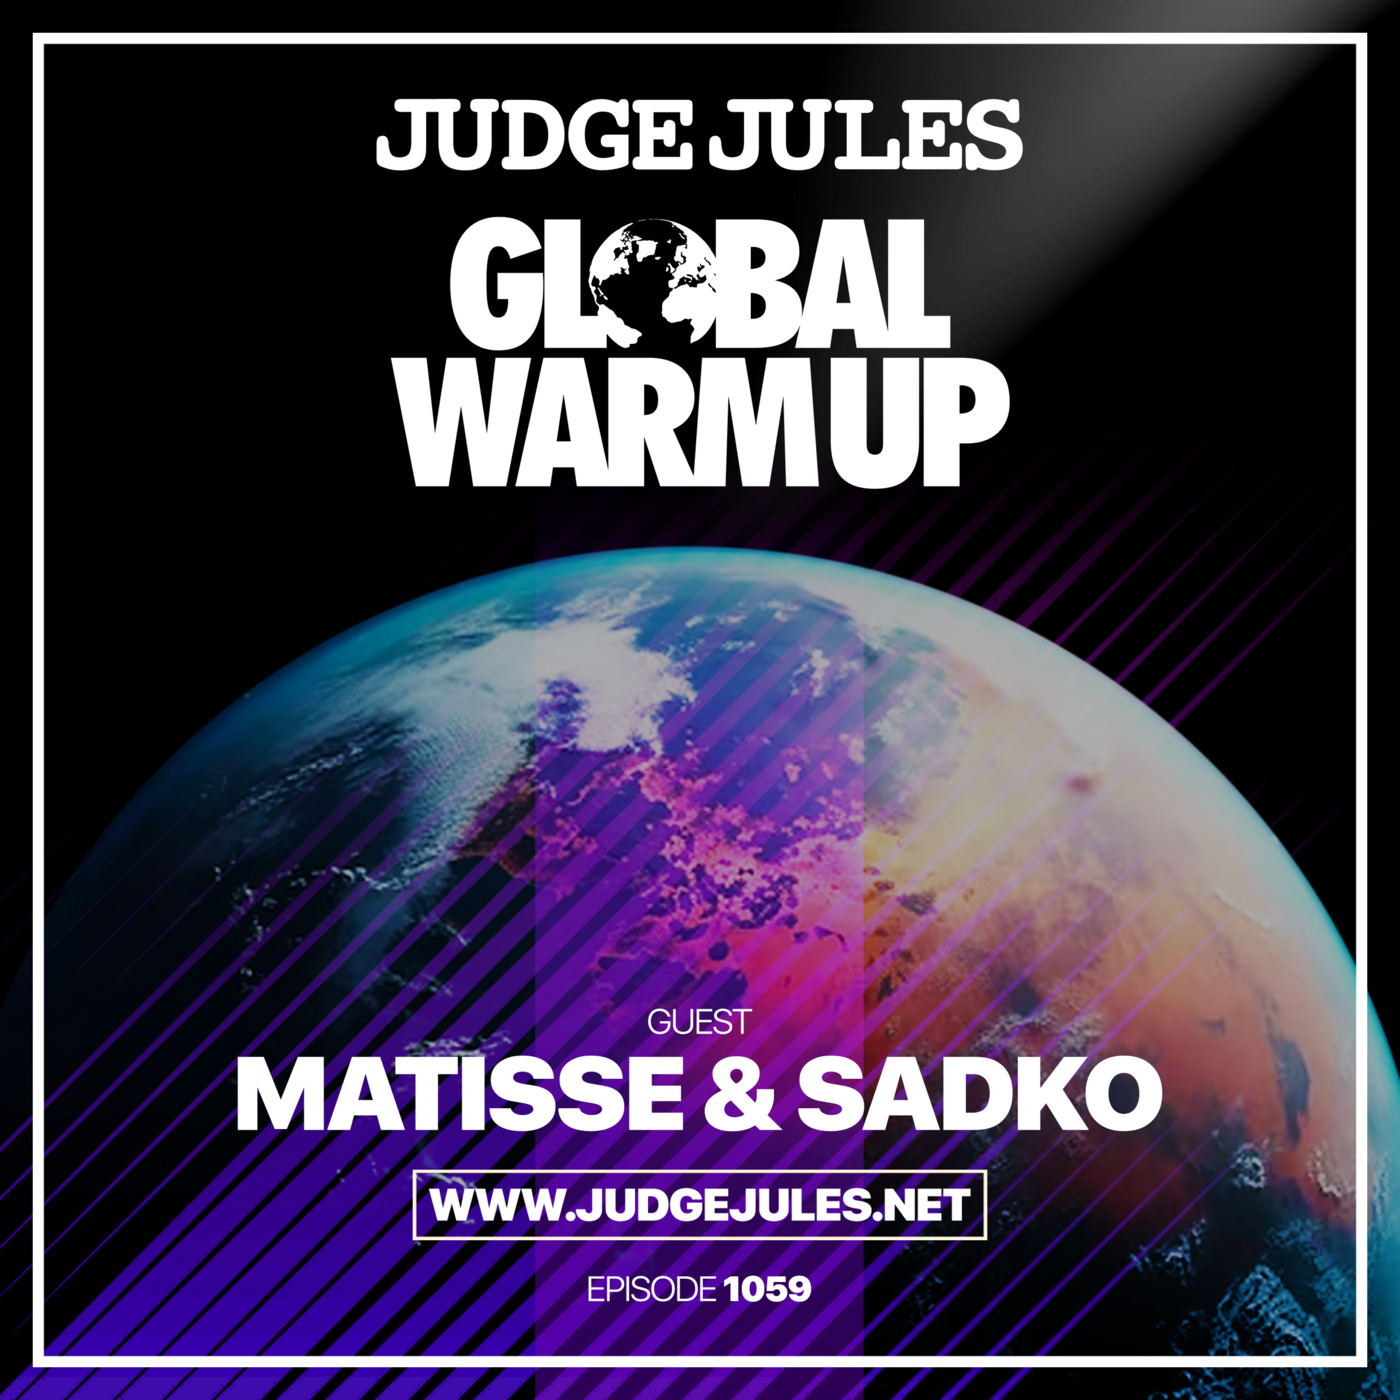 Episode 1059: JUDGE JULES PRESENTS THE GLOBAL WARM UP EPISODE 1059